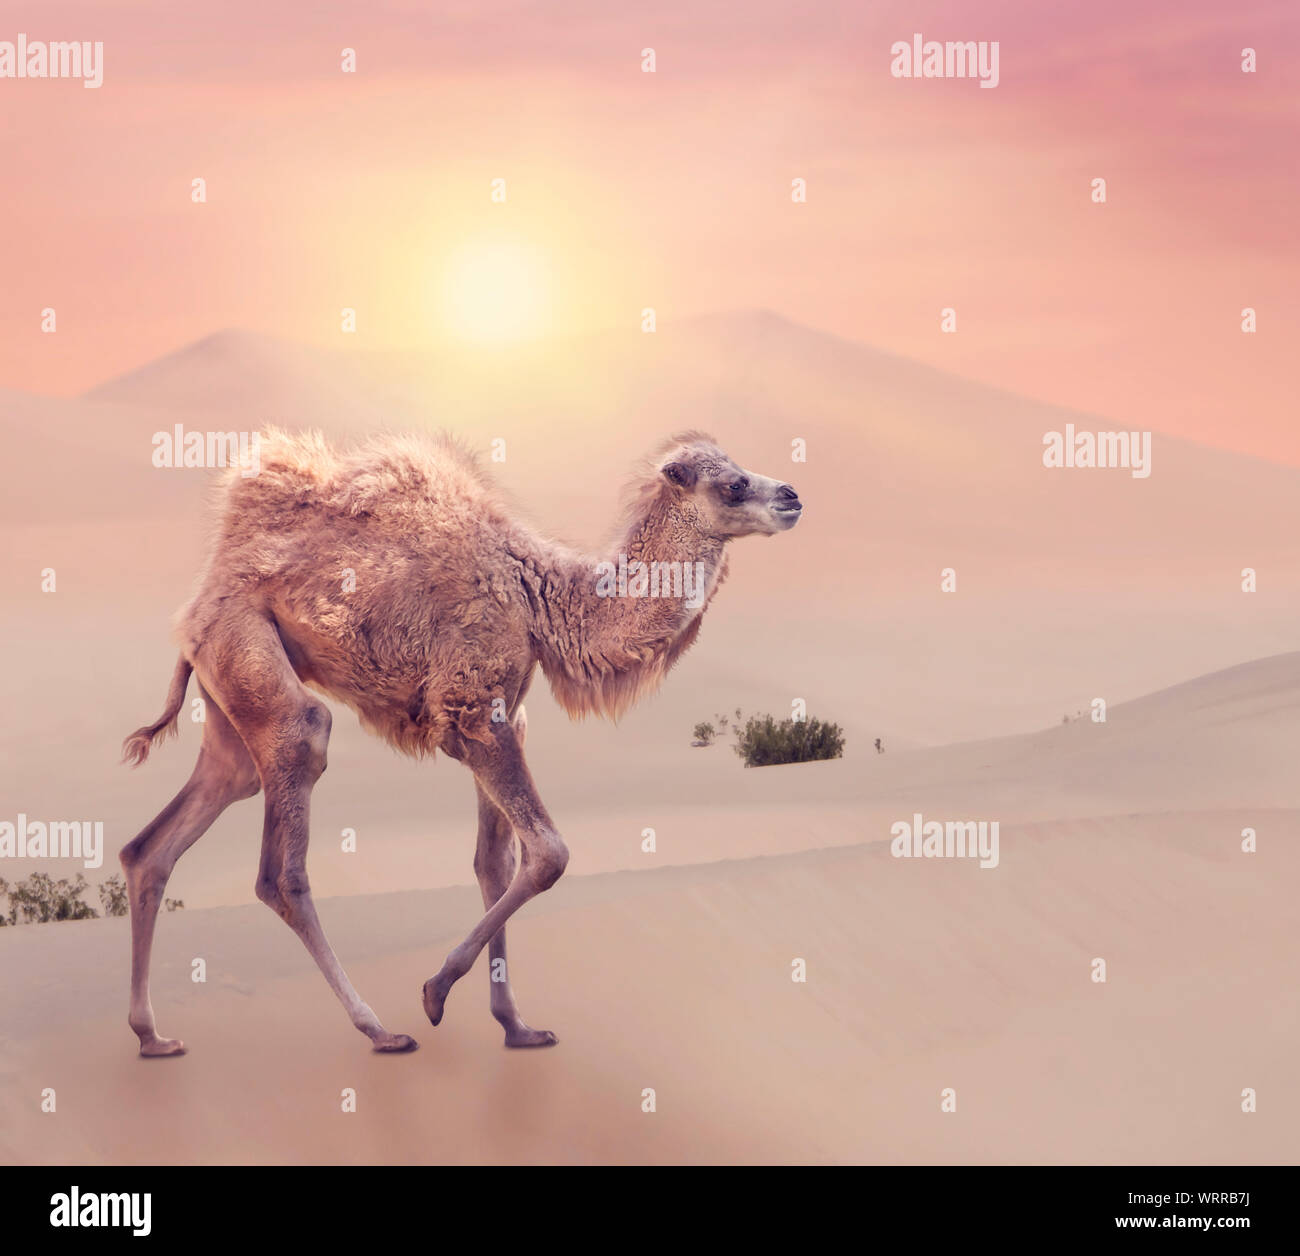 Baby cammello con due gobbe , Bactrian camel camminando nel deserto al tramonto Foto Stock